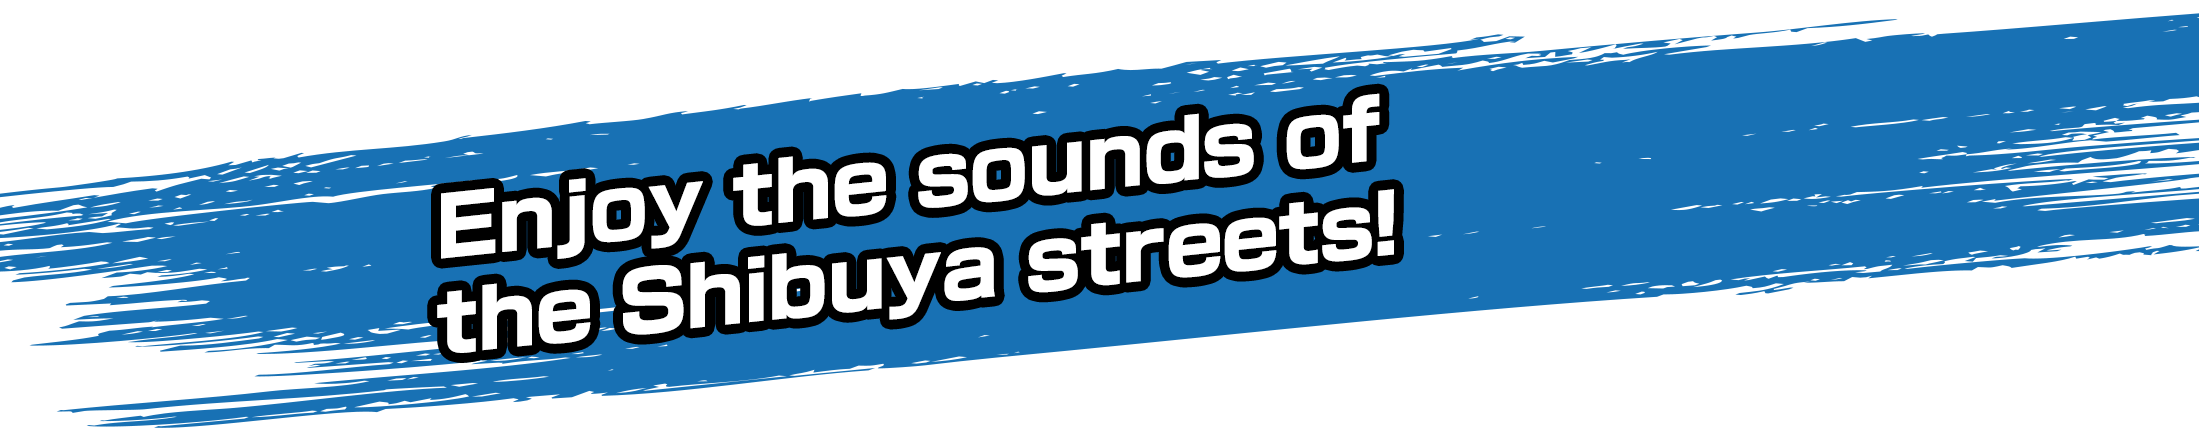 Enjoy the sounds of the Shibuya streets!